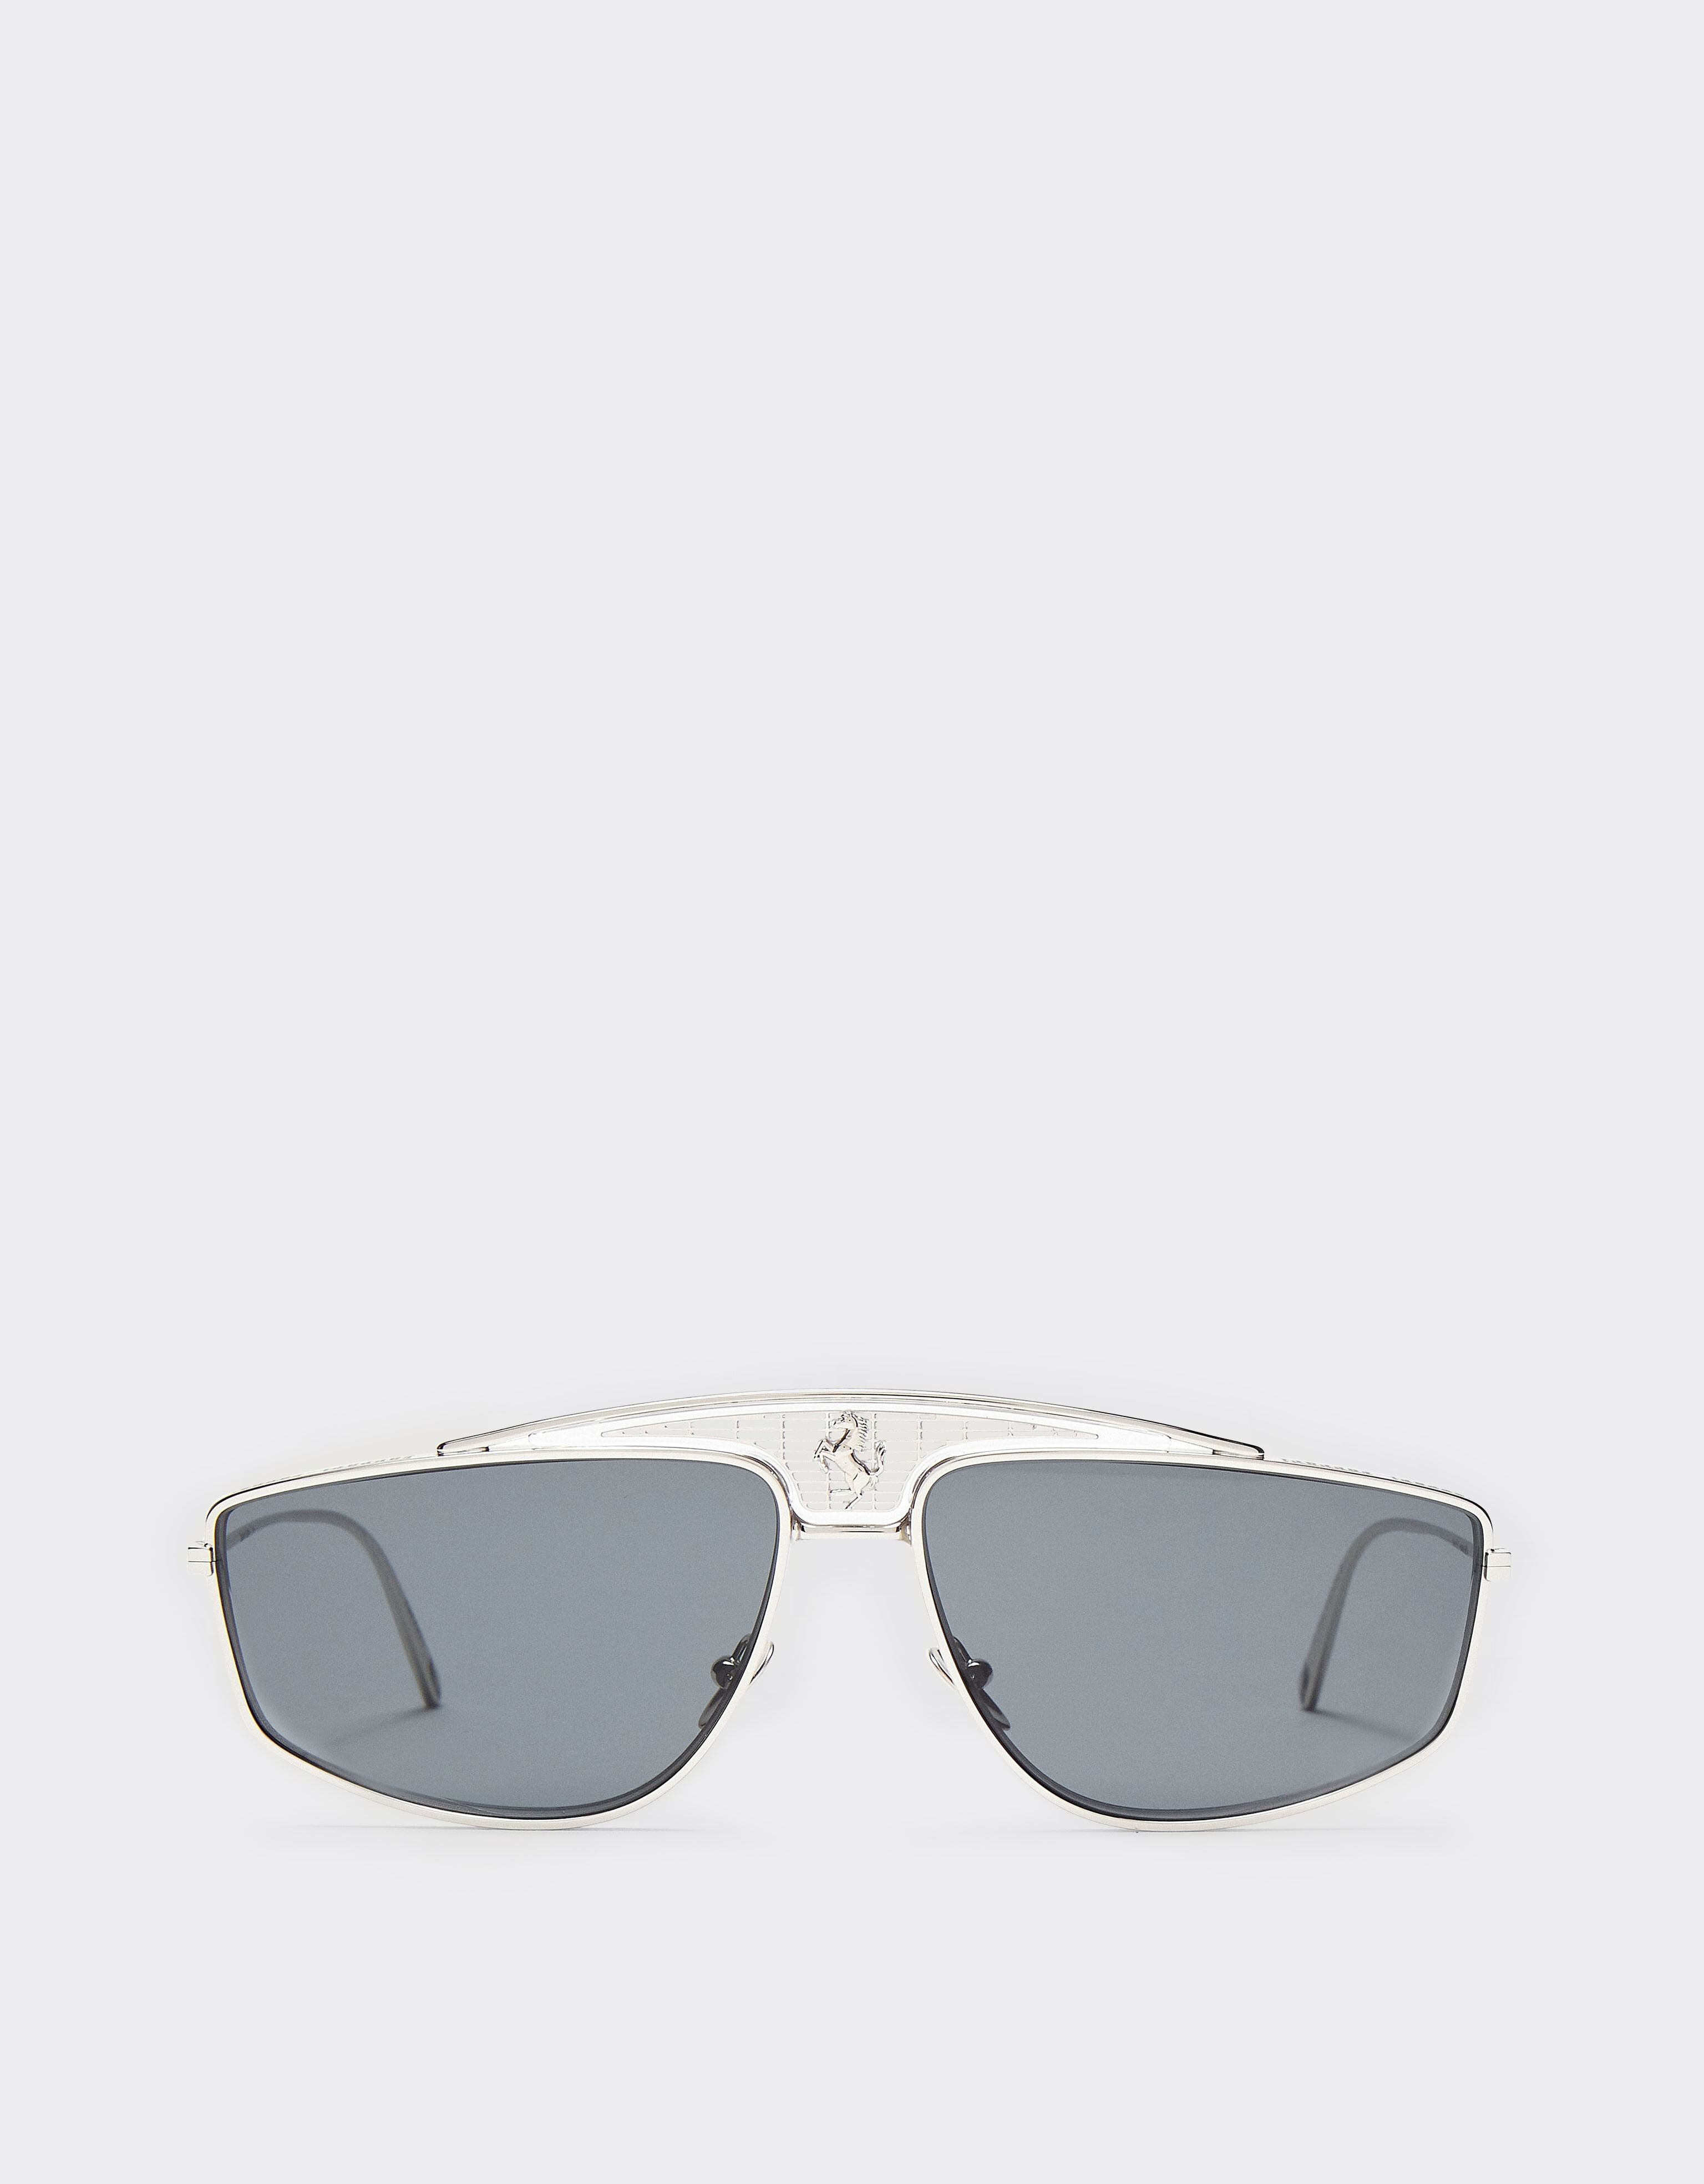 Ferrari Ferrari sunglasses with dark grey lenses Silver F1247f